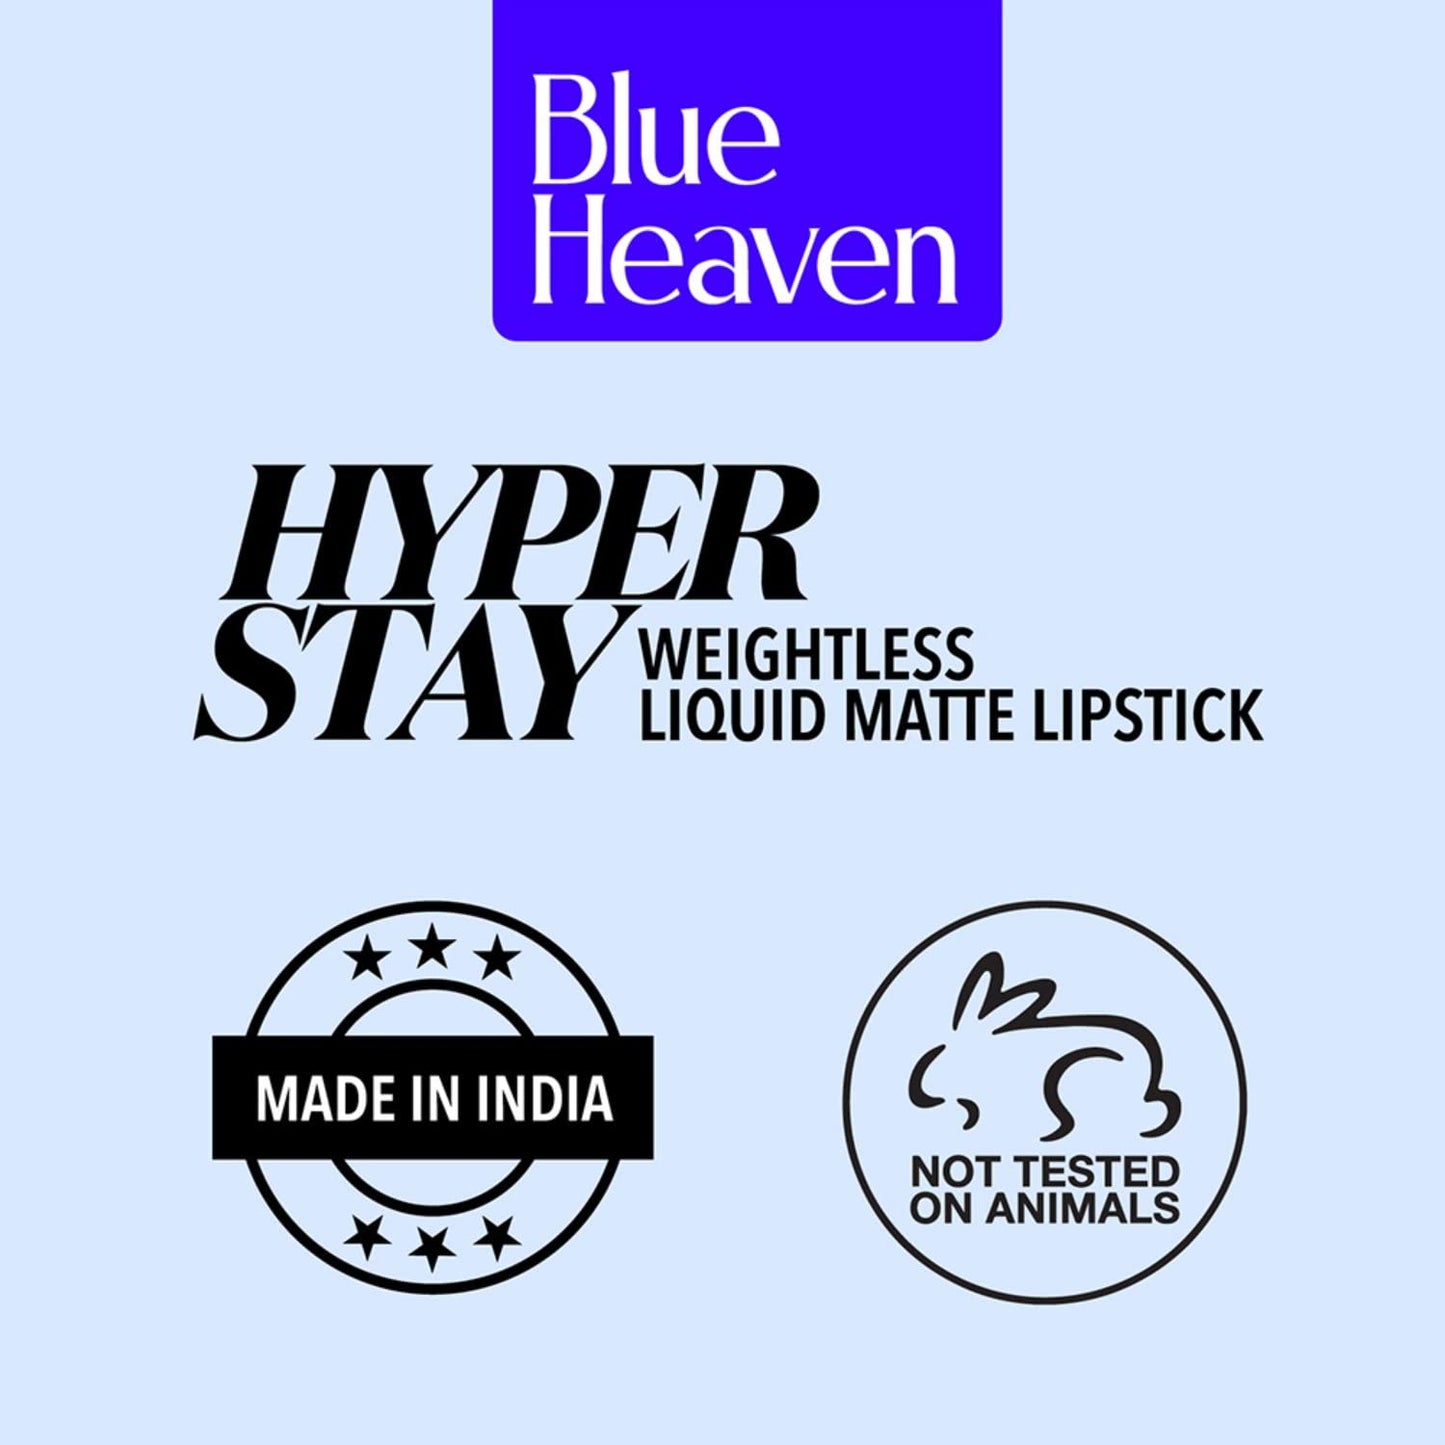 Blue Heaven Hyperstay Weightless Liquid Matte Lipstick, Smudgeproof, Transfer proof, Peach Touch, 6ml